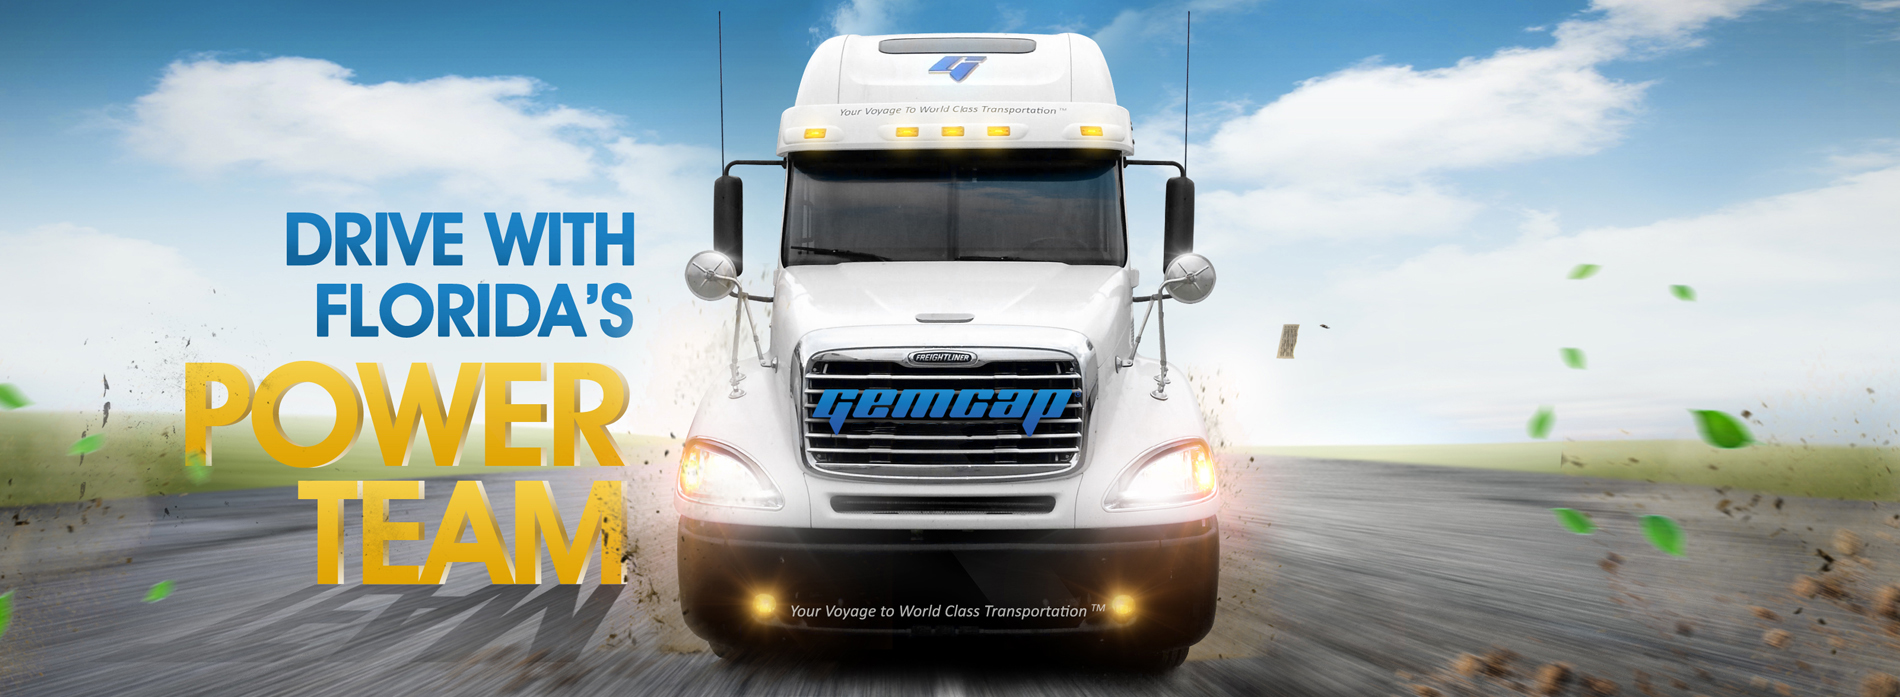 gemcap-trucking-bannersmall1n